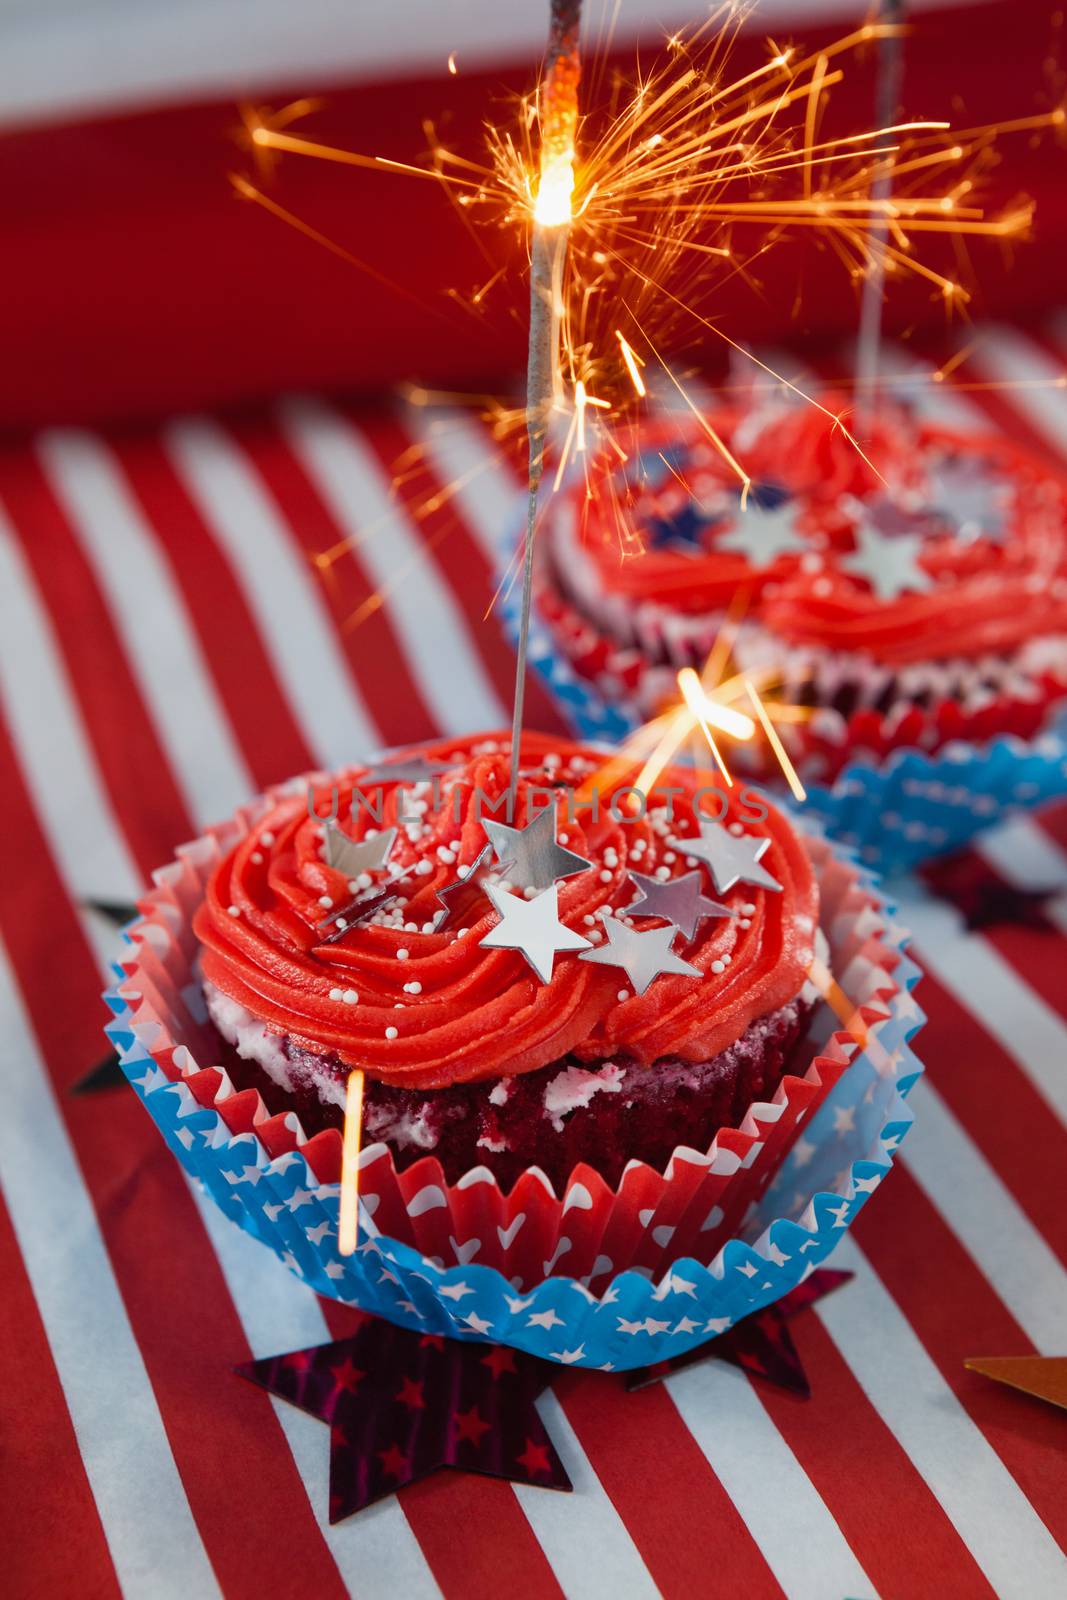 Burning sparkler on decorated cupcakes by Wavebreakmedia